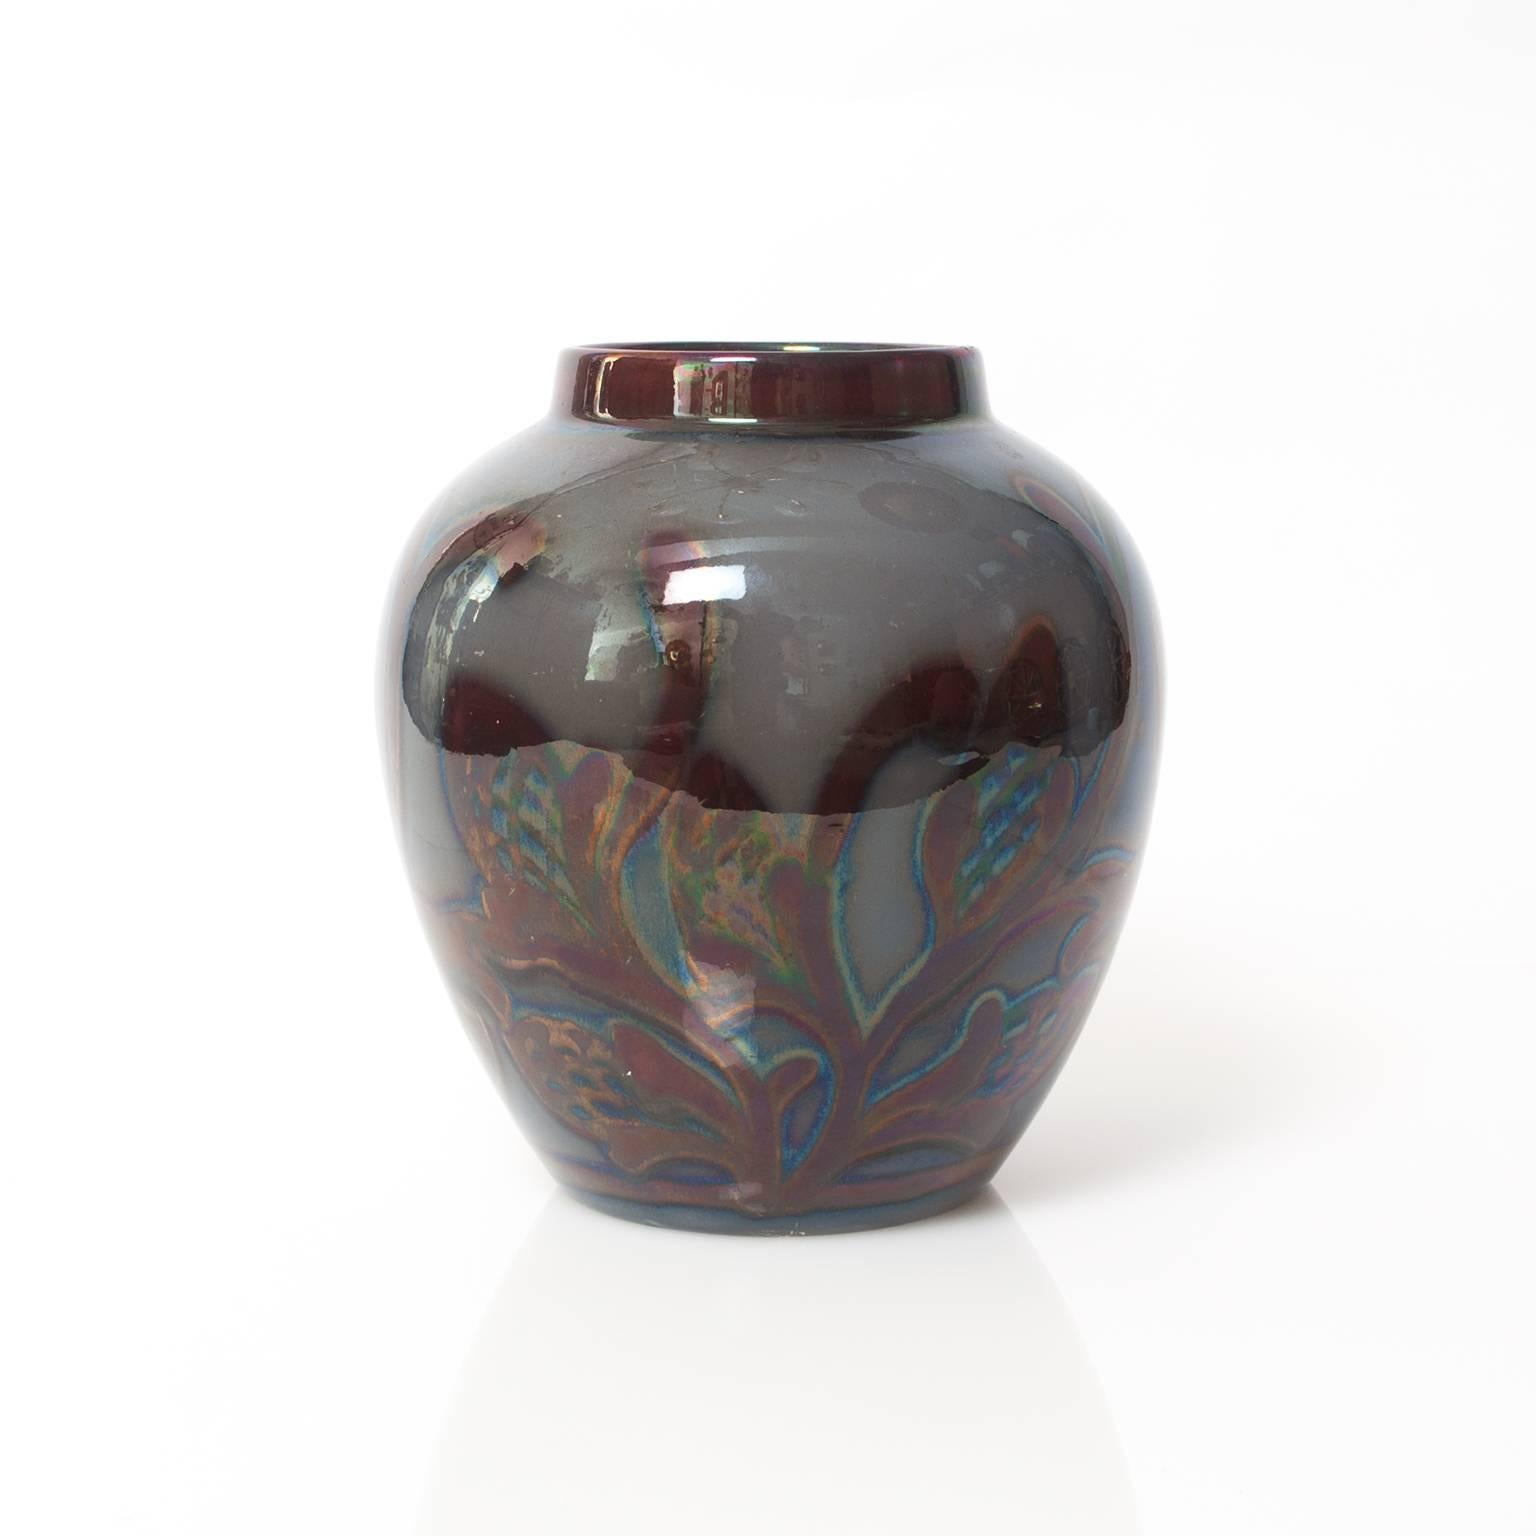 Seven Art Deco Luster Glazed Ceramic Vases by Edgar Bockman for Hoganas (Art déco)